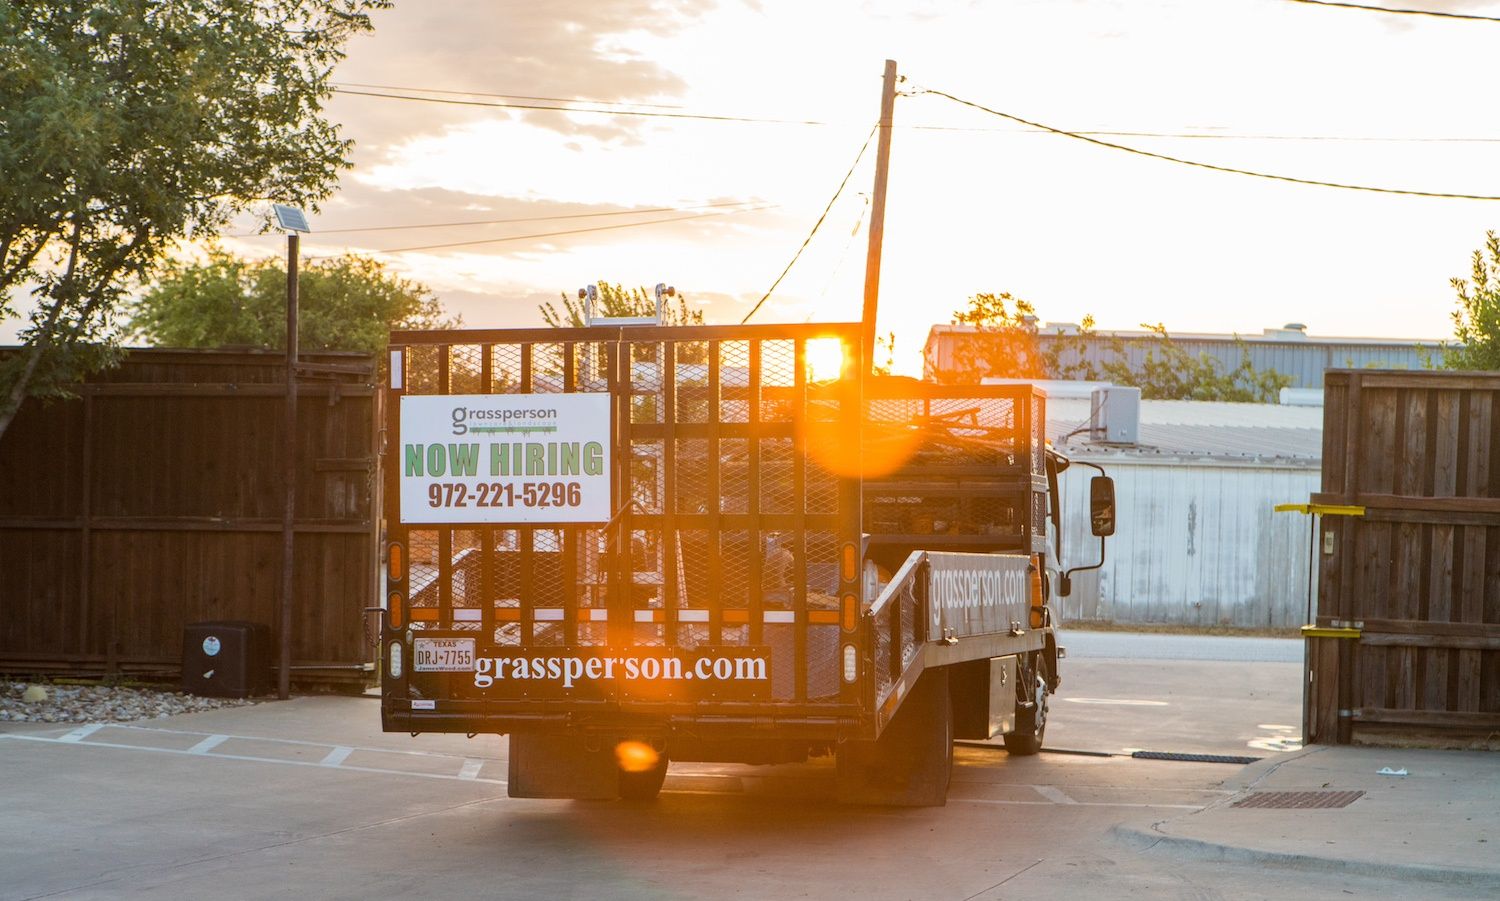 Grassperson truck with Now Hiring sign in Lewisville, TX